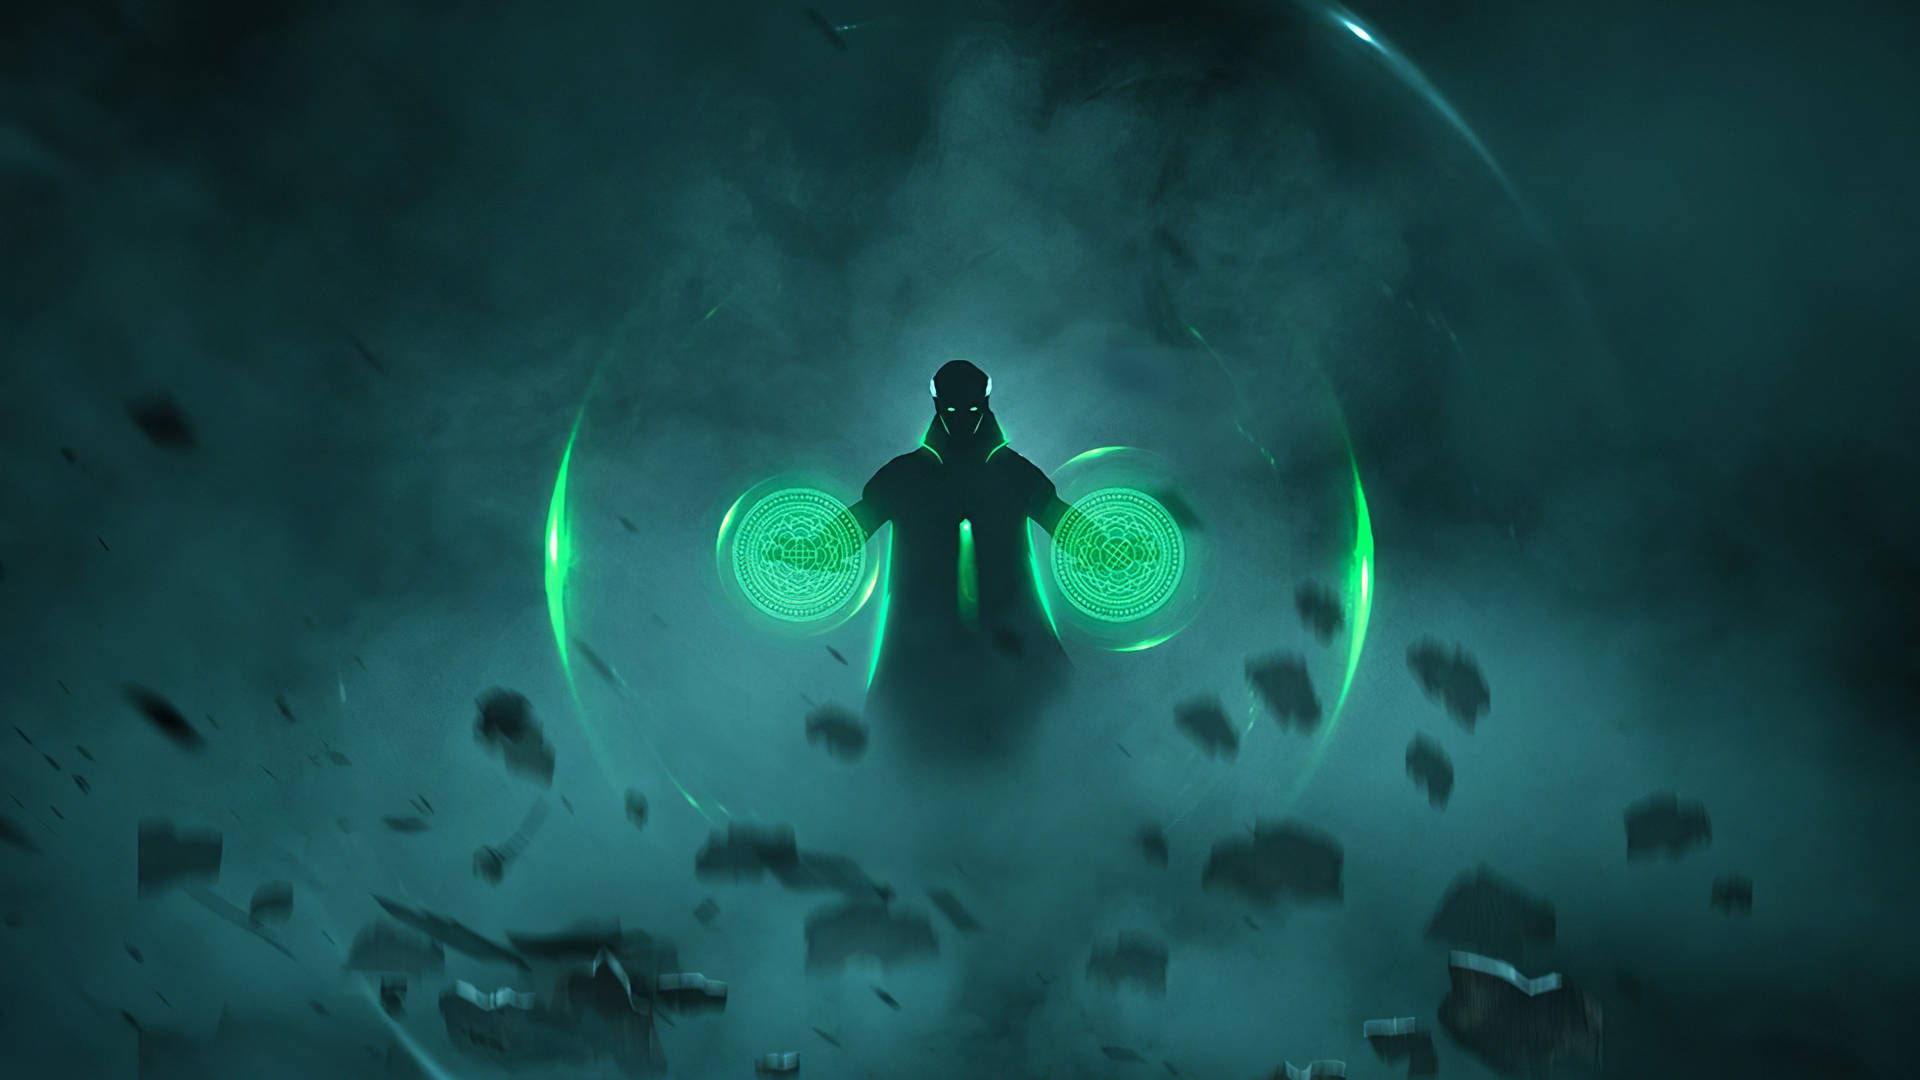 Green Power Doctor Strange Minimalist Background